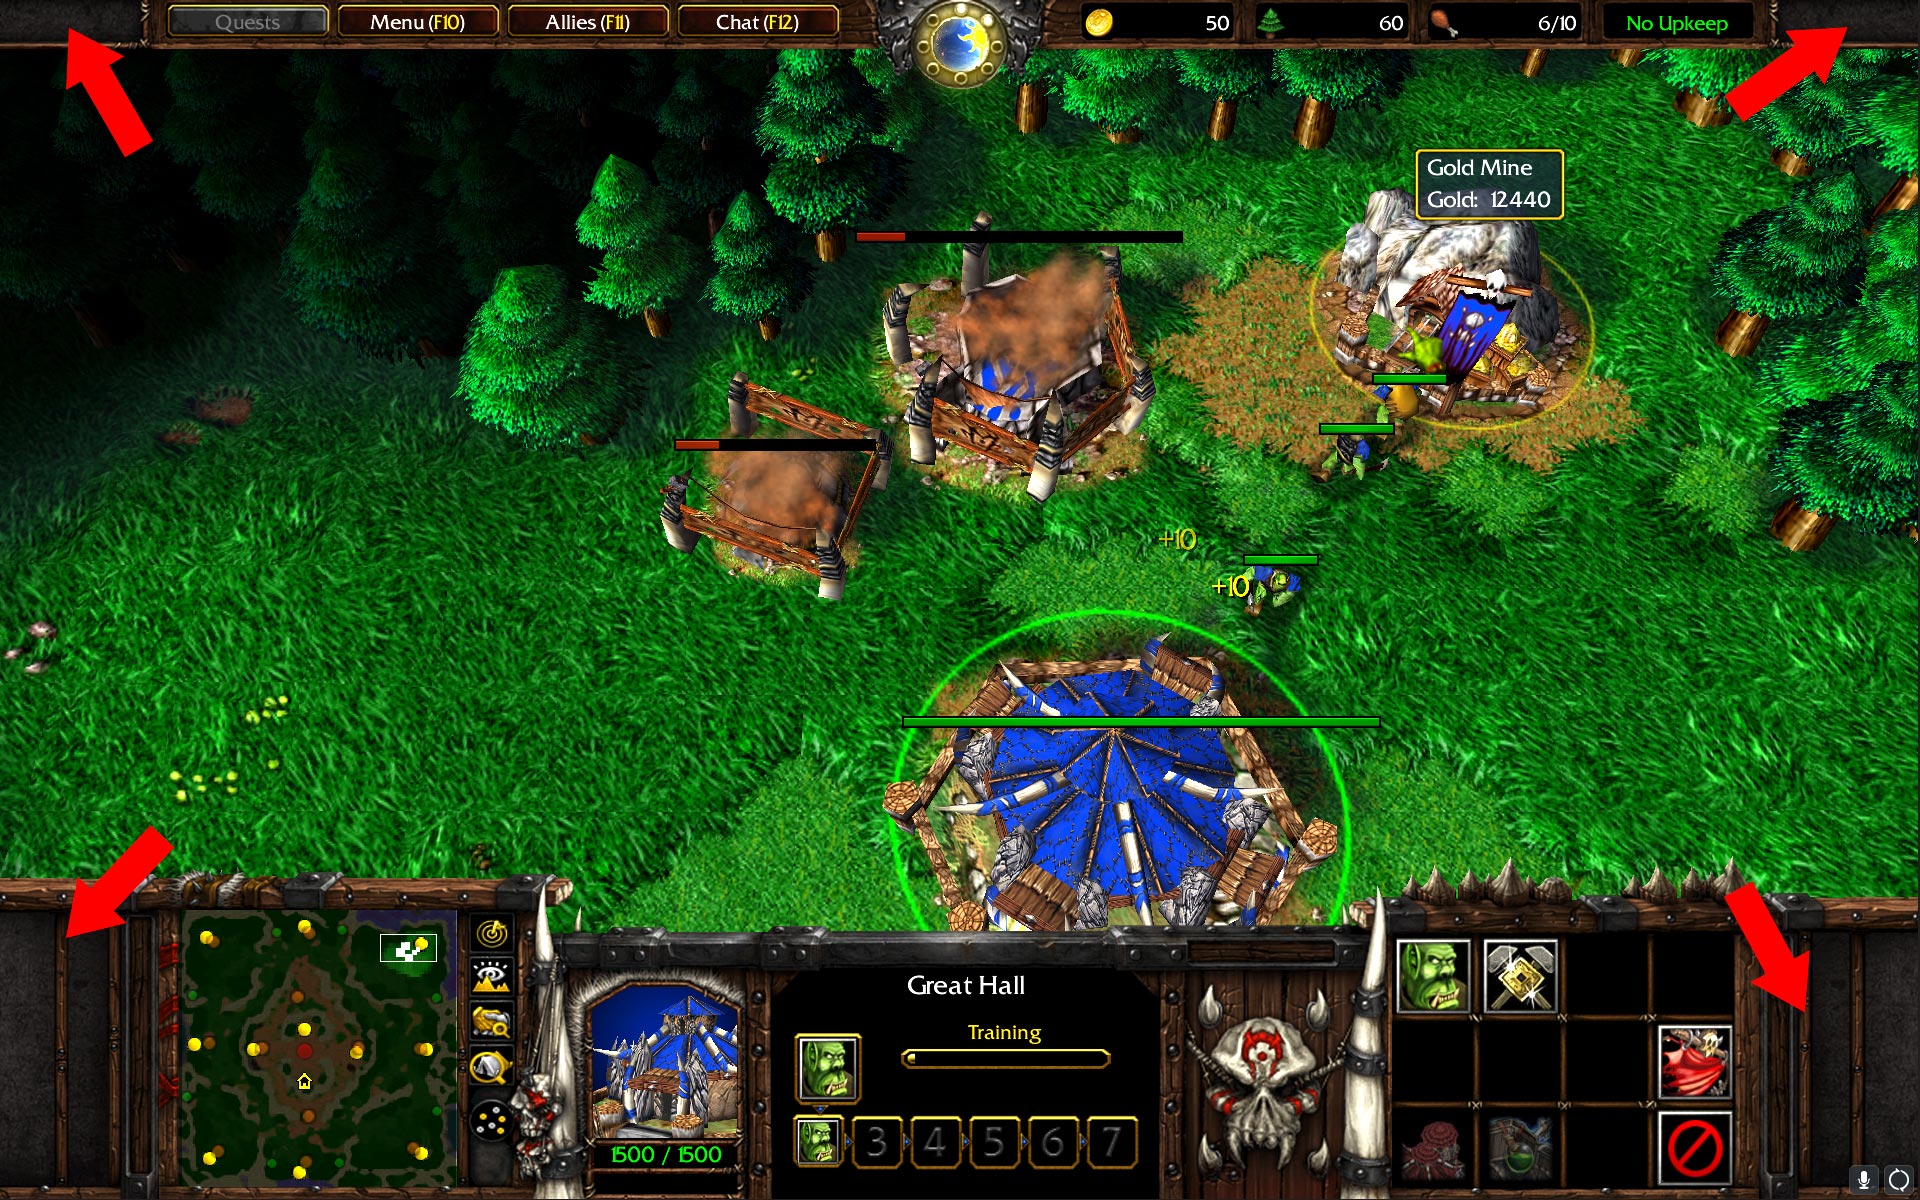 Warcraft 3 Patch